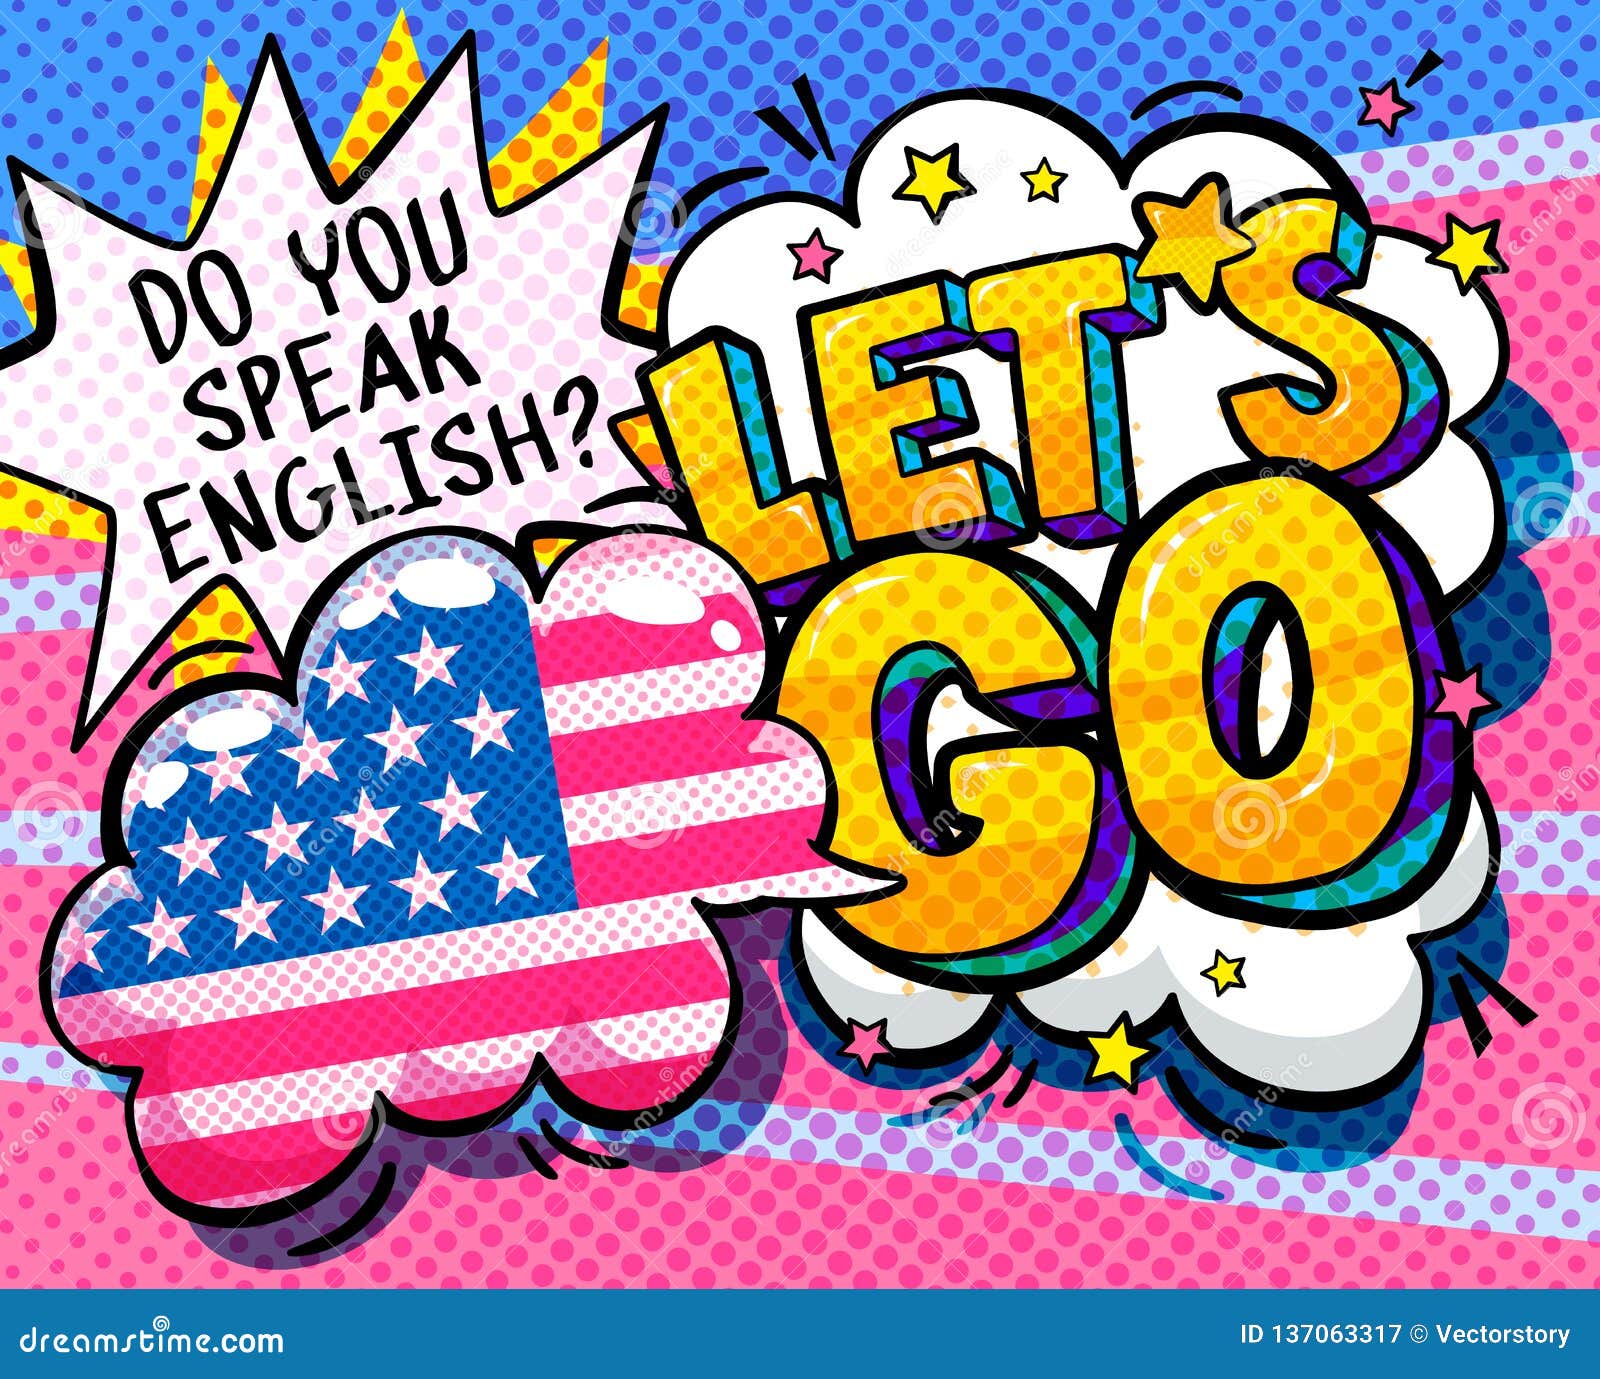 29 лет по английски. Поп арт английский язык. Speak English картинка. Do you speak English картинки. Let's speak English.